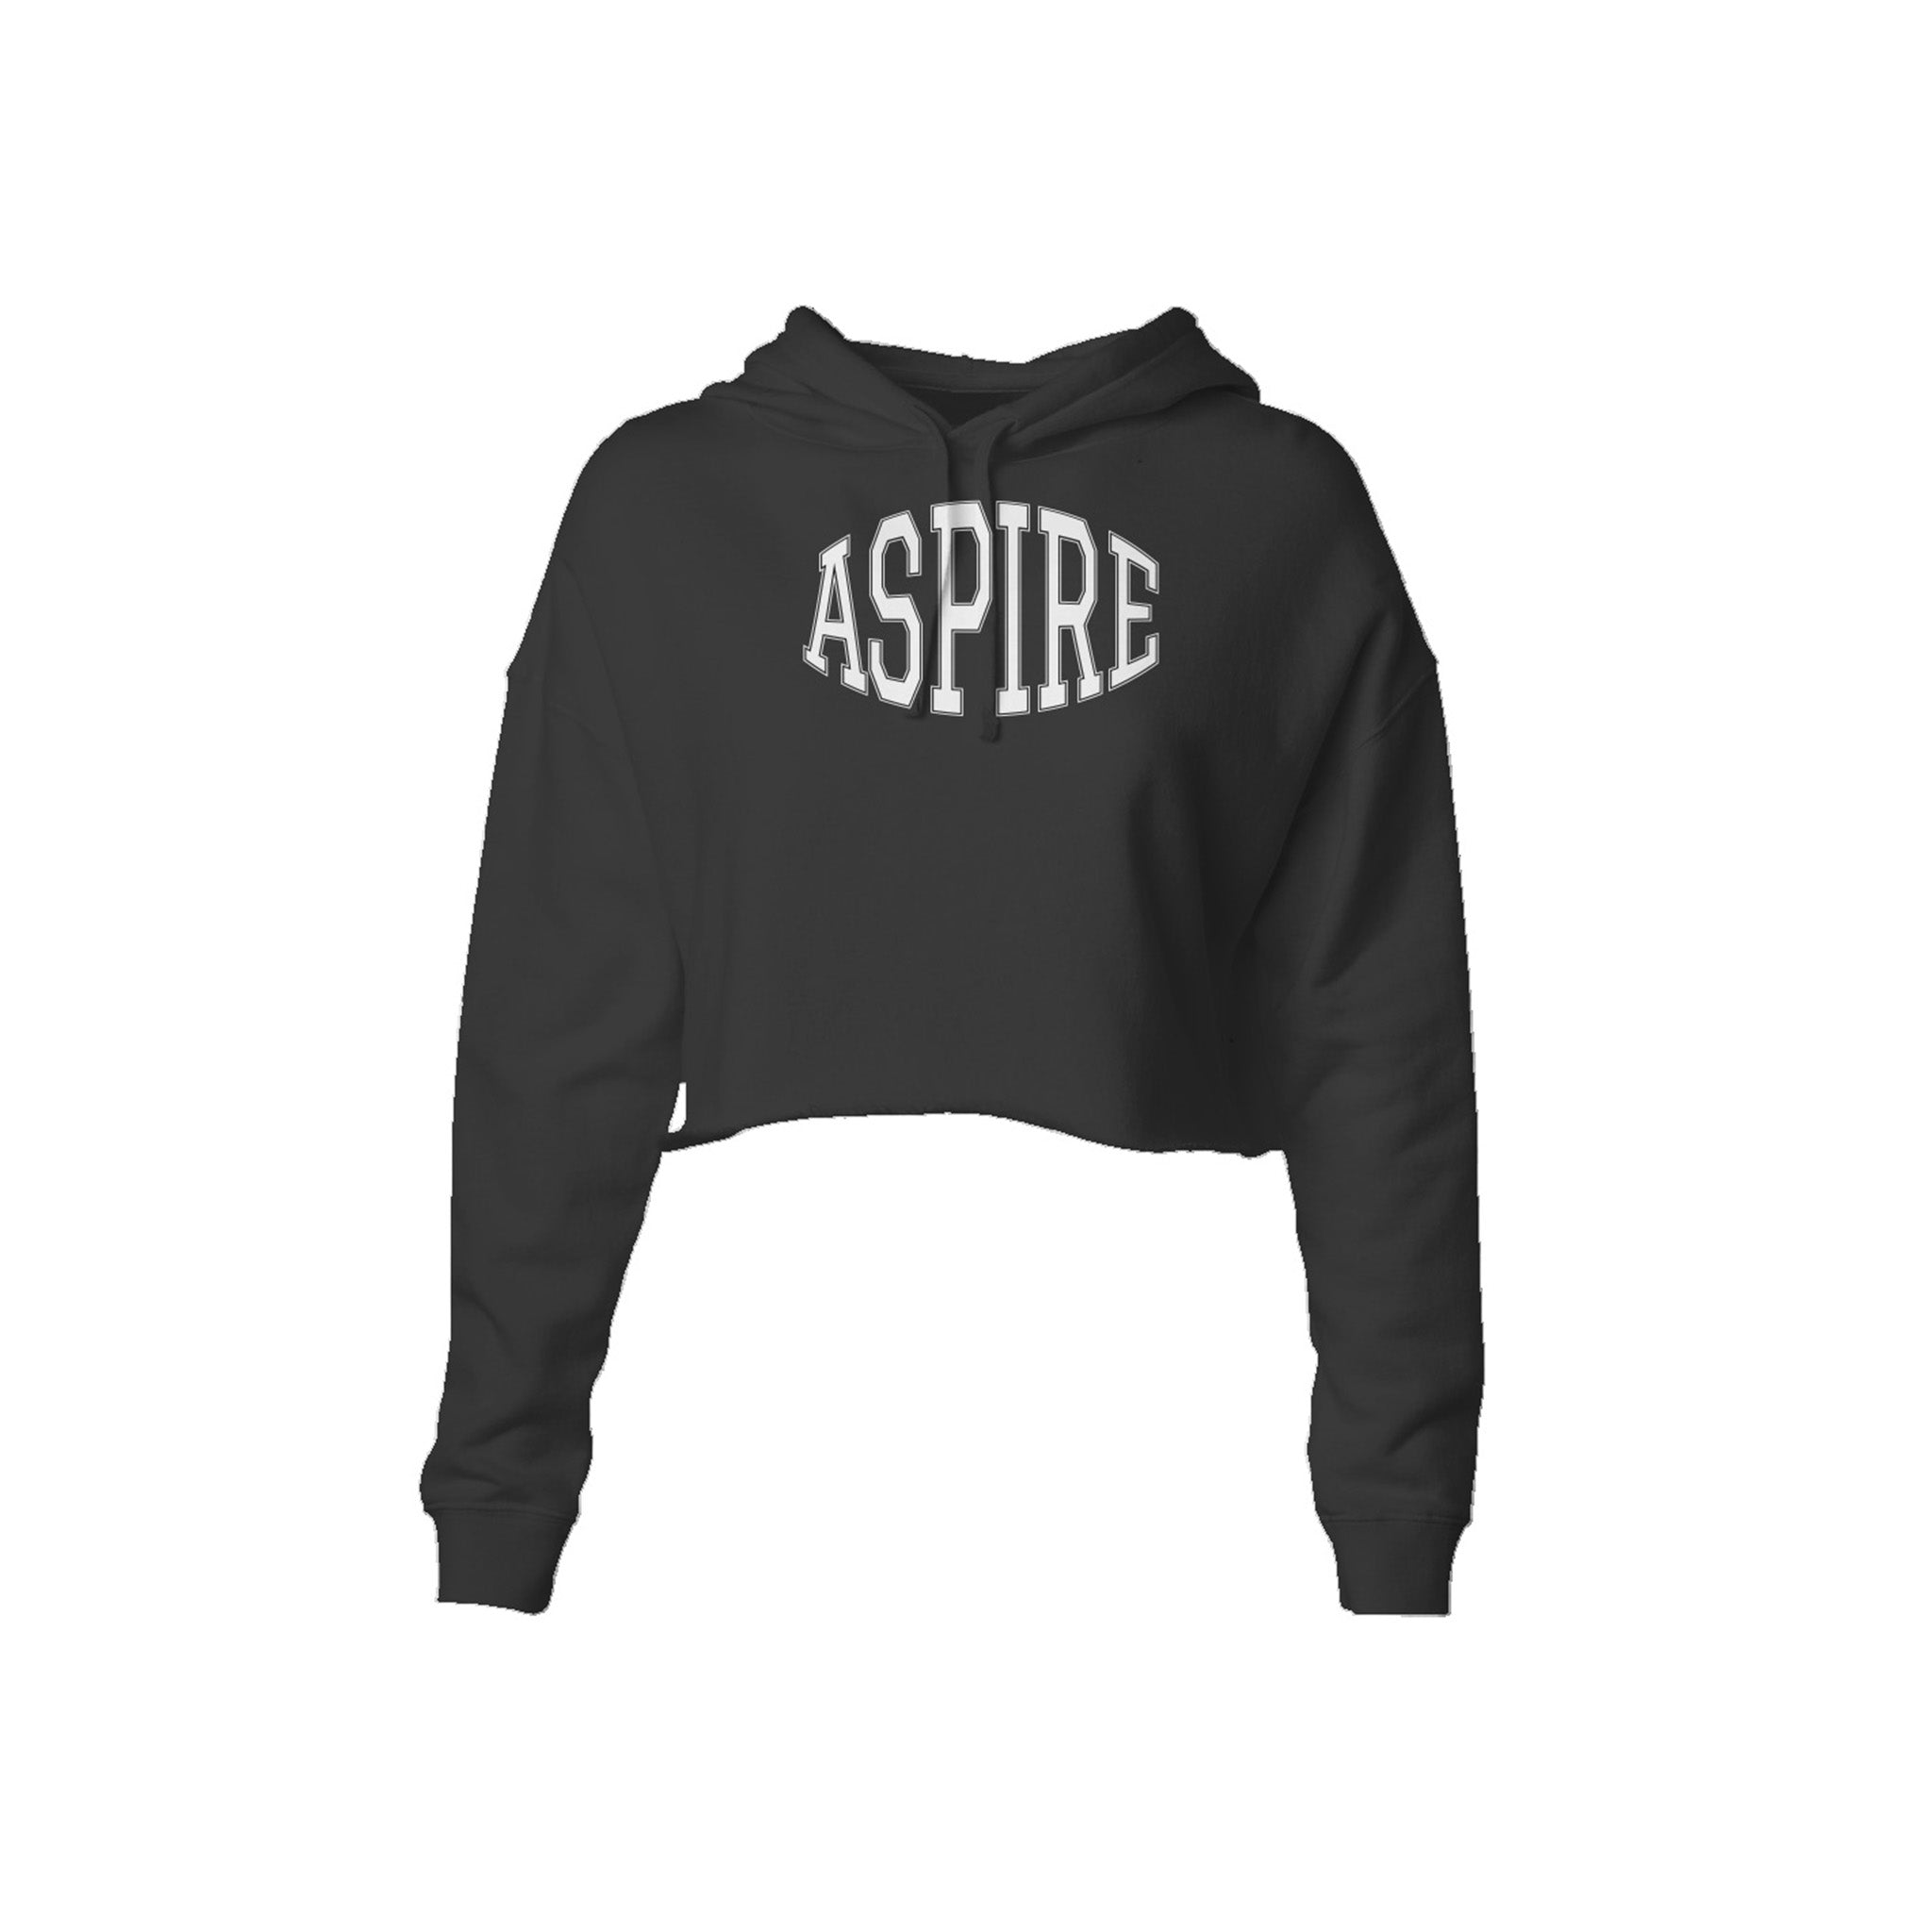 Aspire - Lightweight Cropped Hoodie